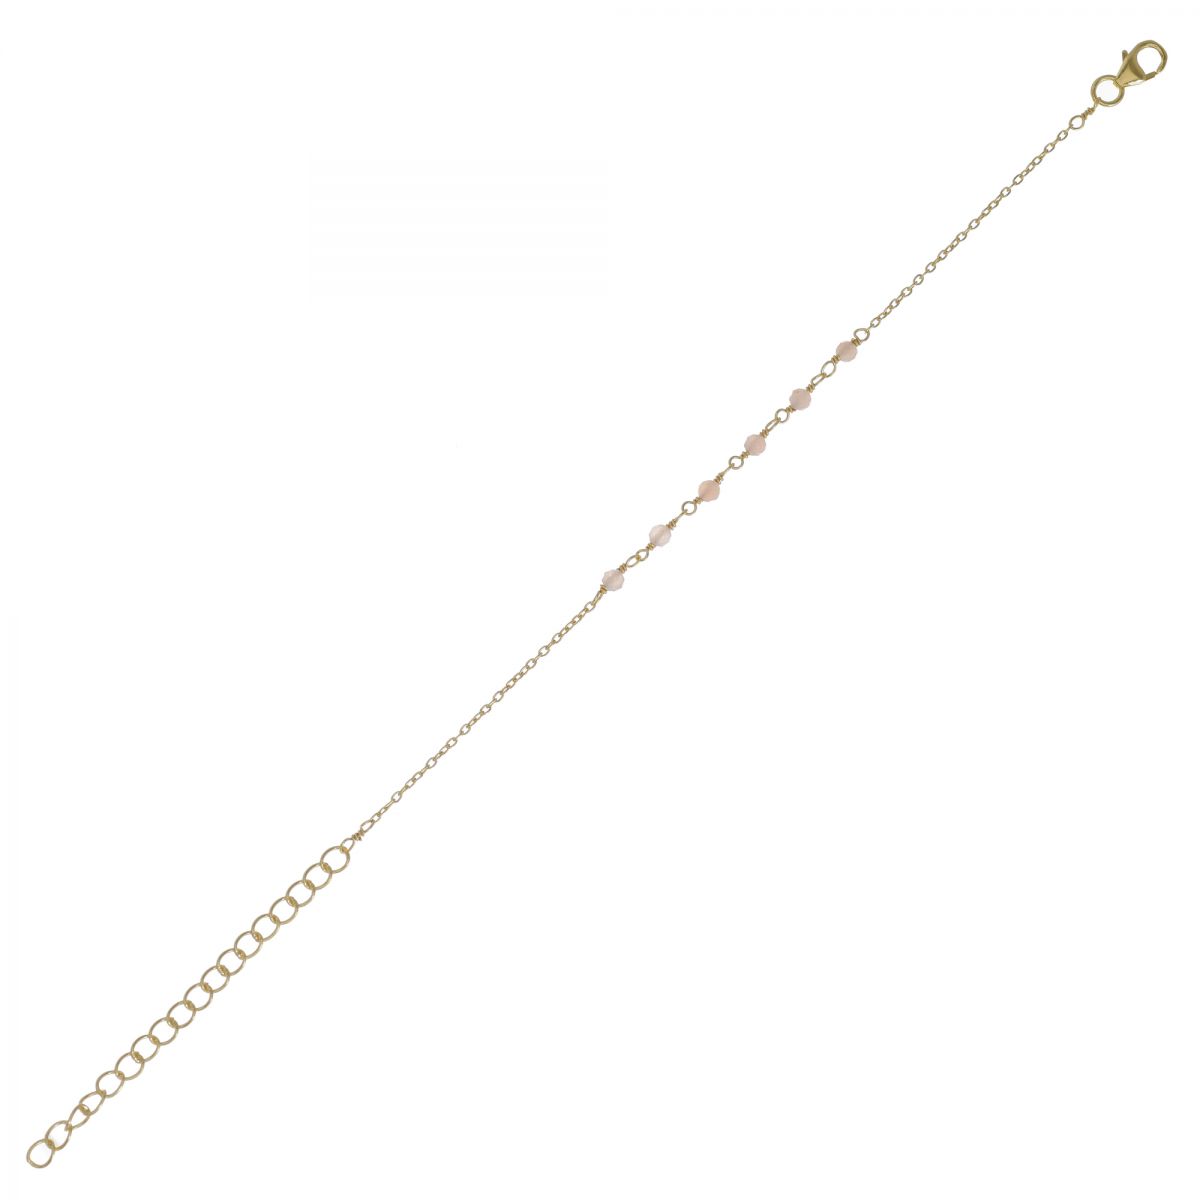 ff bracelet 3mm 5 peach moonstone beaded gold plated